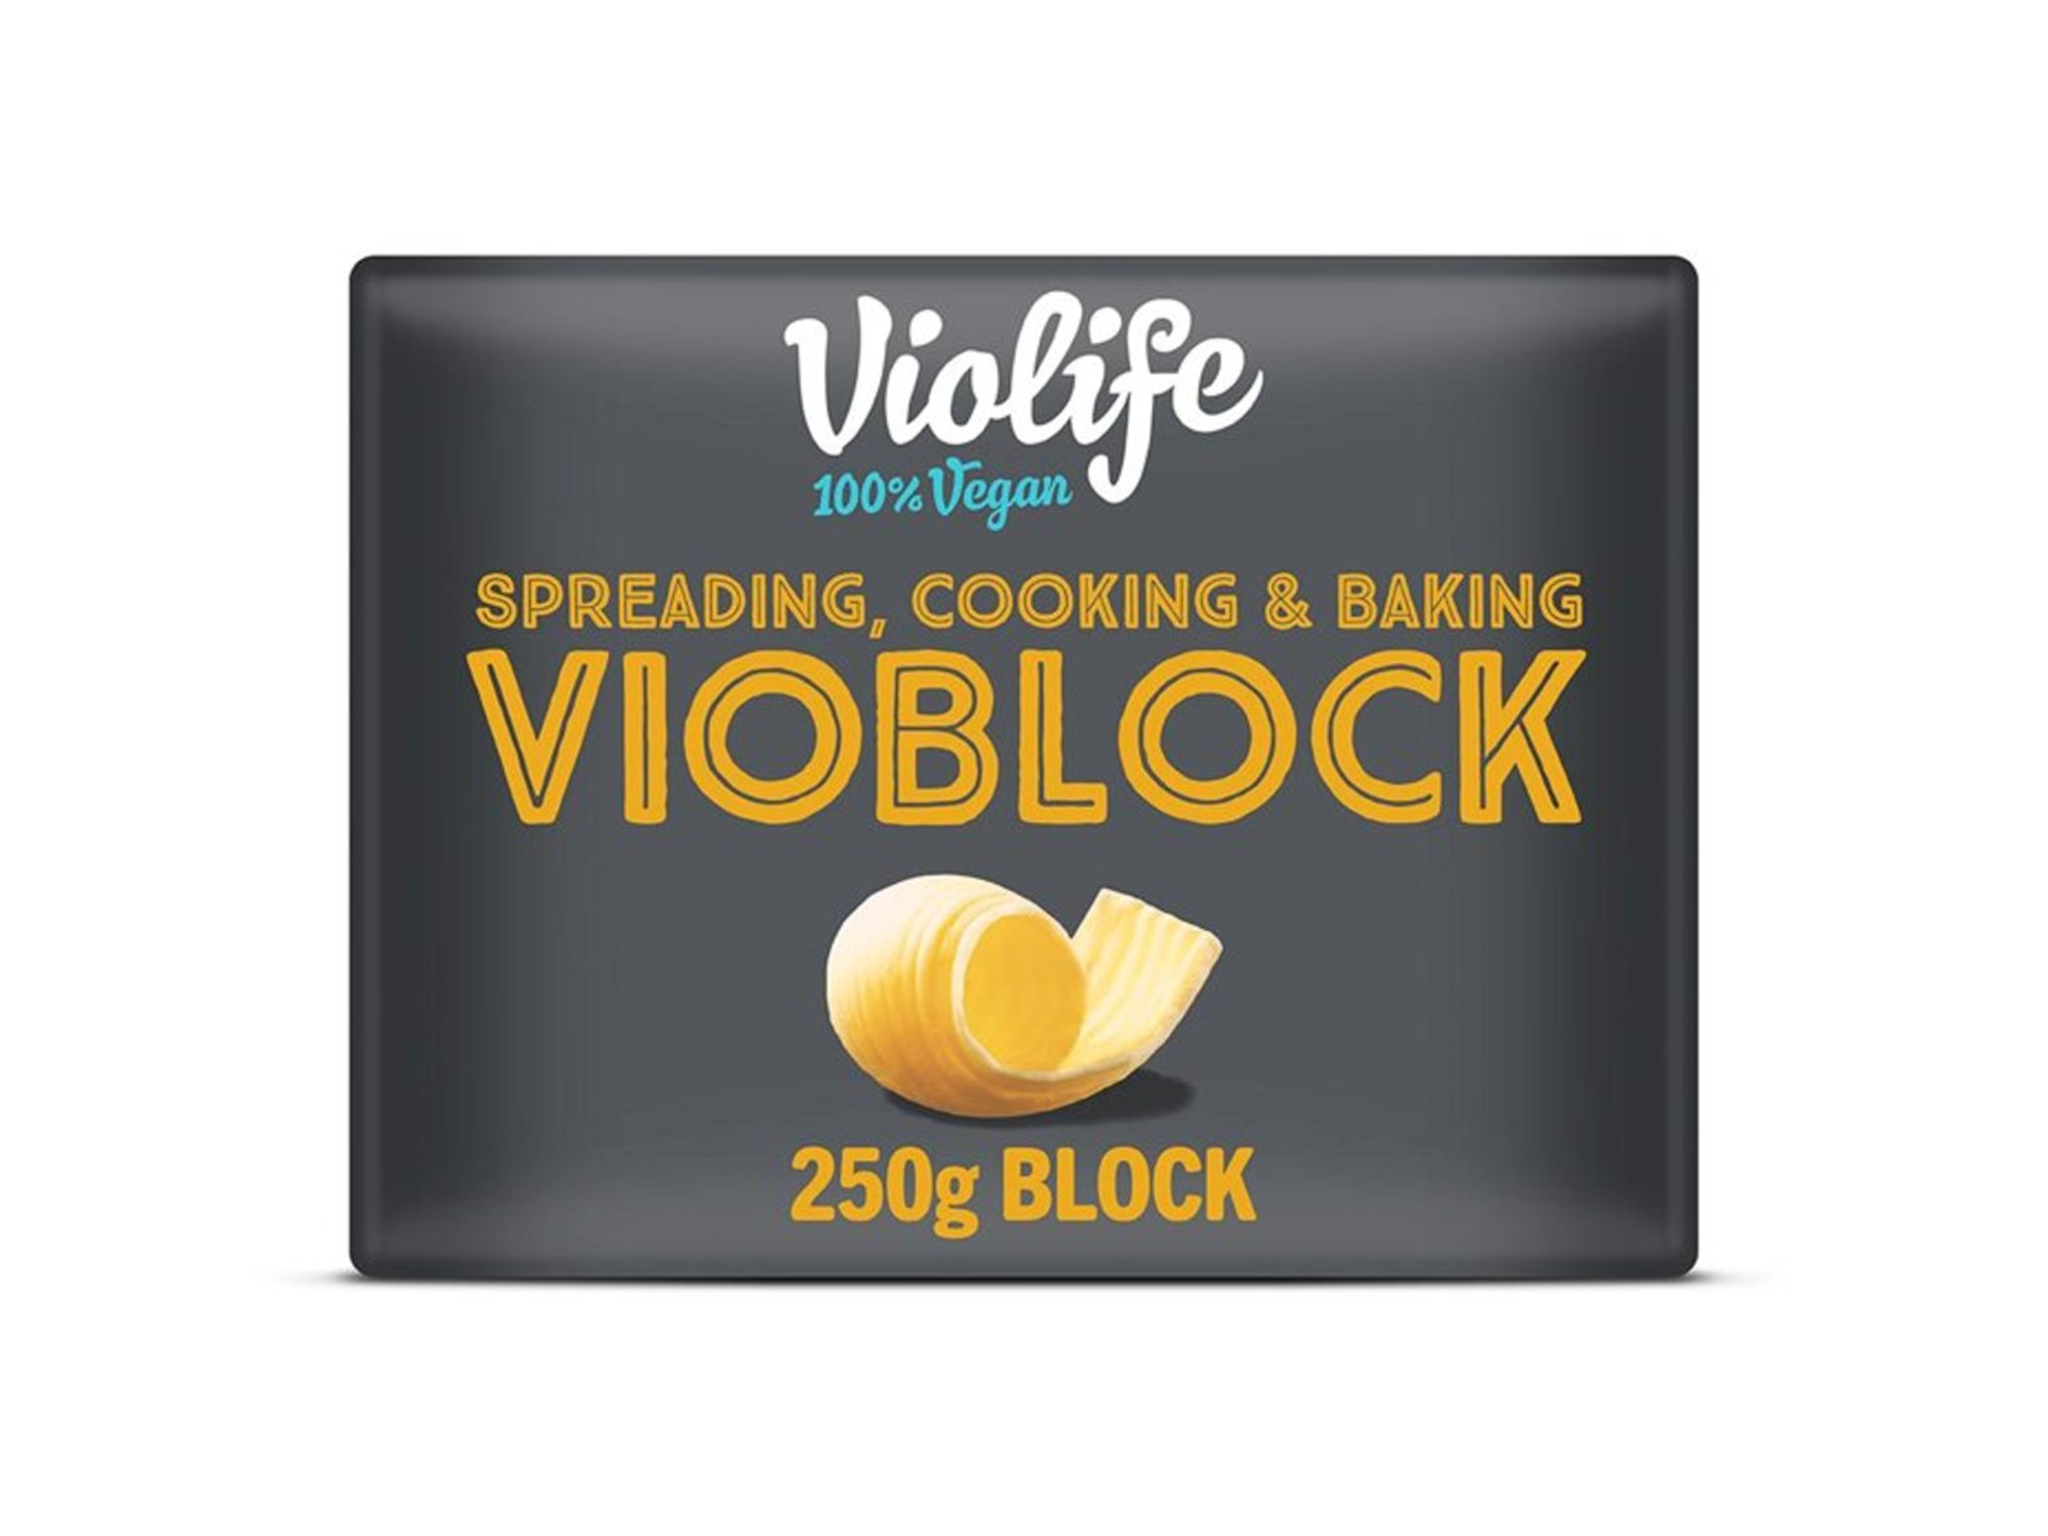 best vegan butters indybest  Violife vioblock